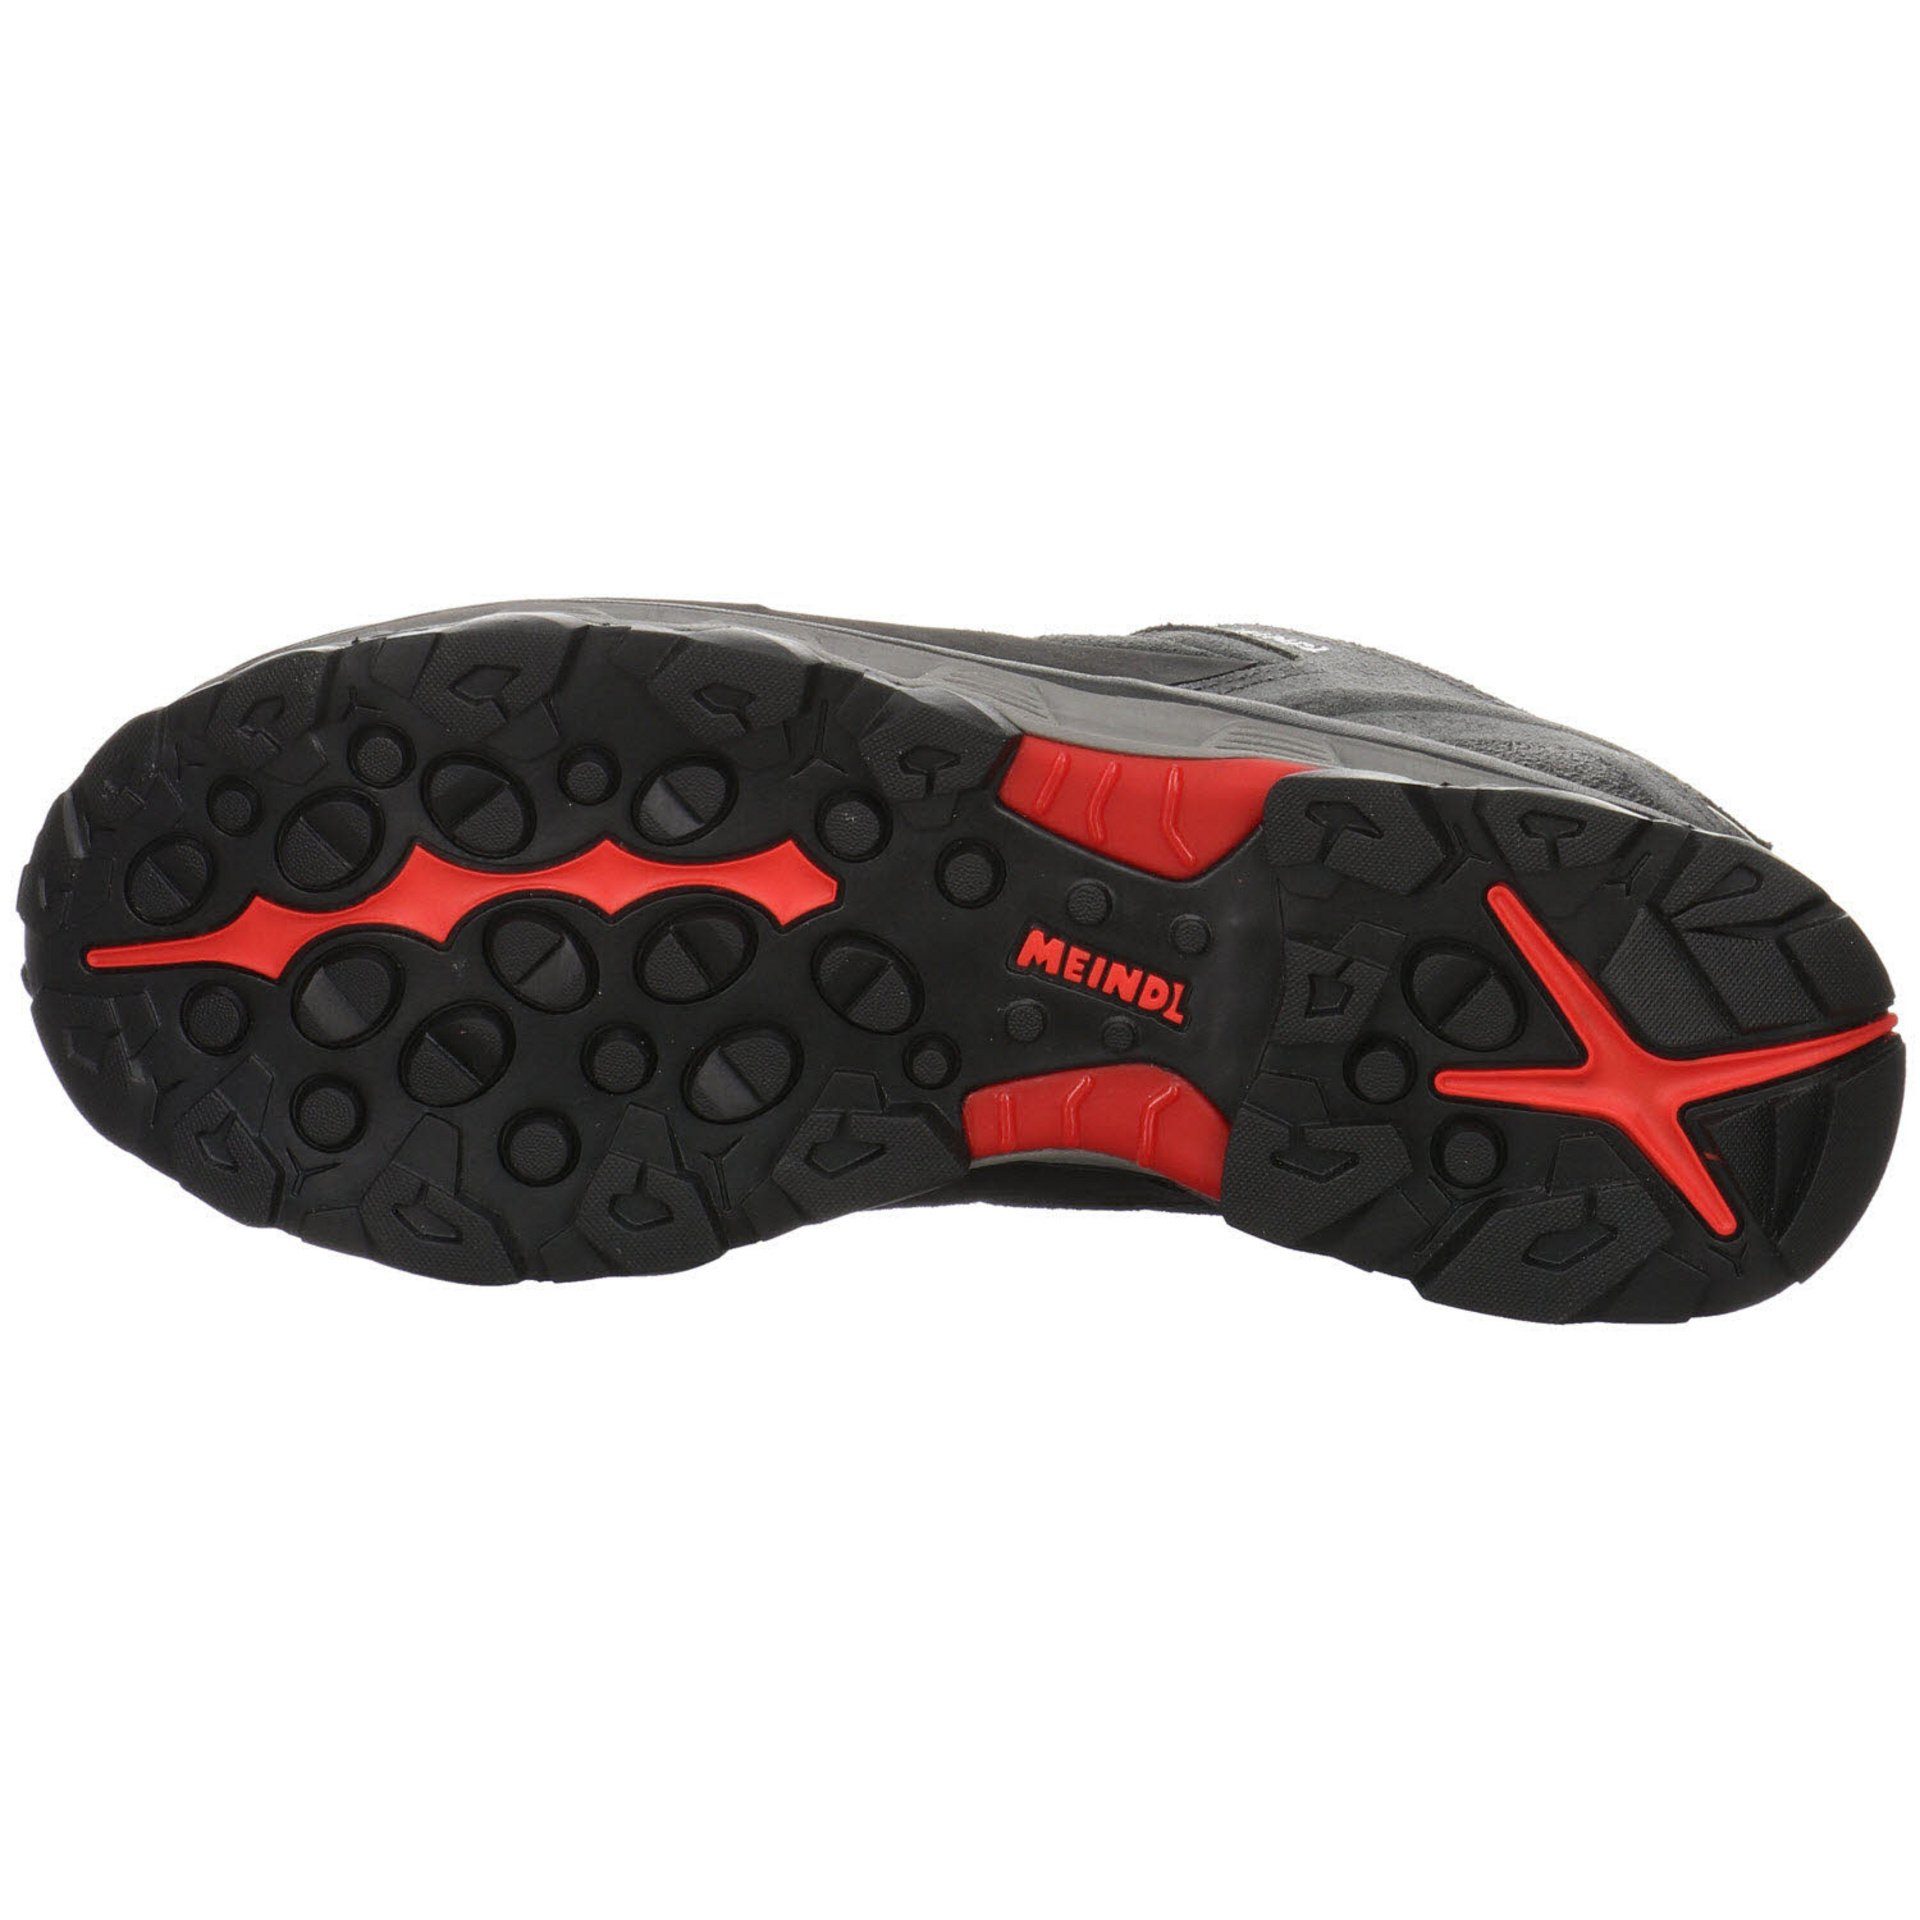 Meindl Herren Outdoor m Lite schwarz kombiniert GTX Outdoorschuh Outdoorschuh Schuhe Trail Leder-/Textilkombination